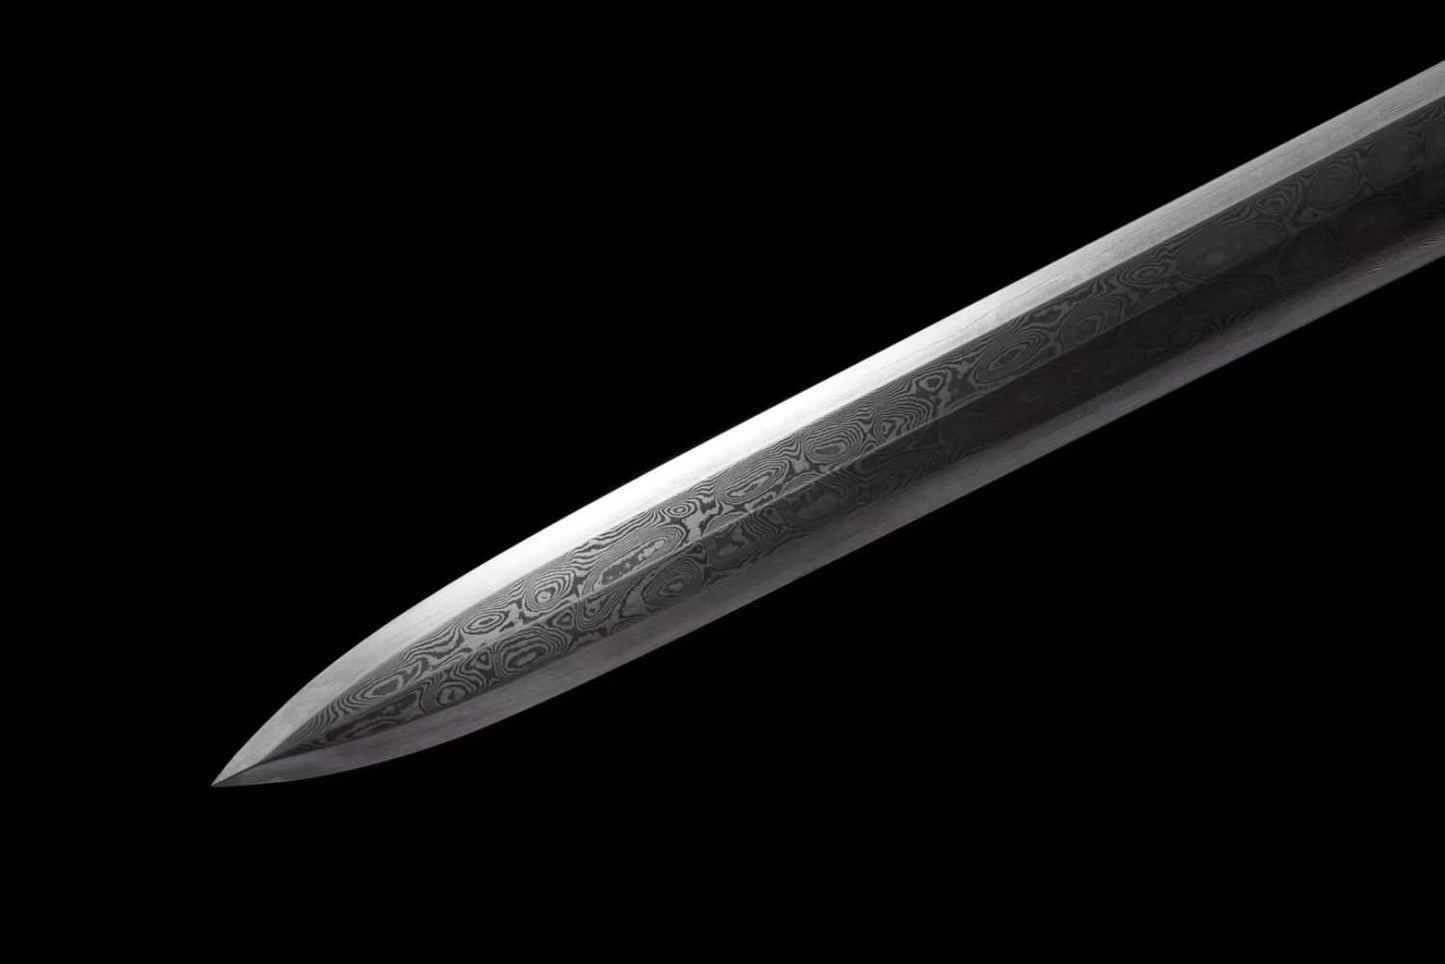 Phoenix Sword Real,Damascus Steel Blades,Rosewood Scabbard